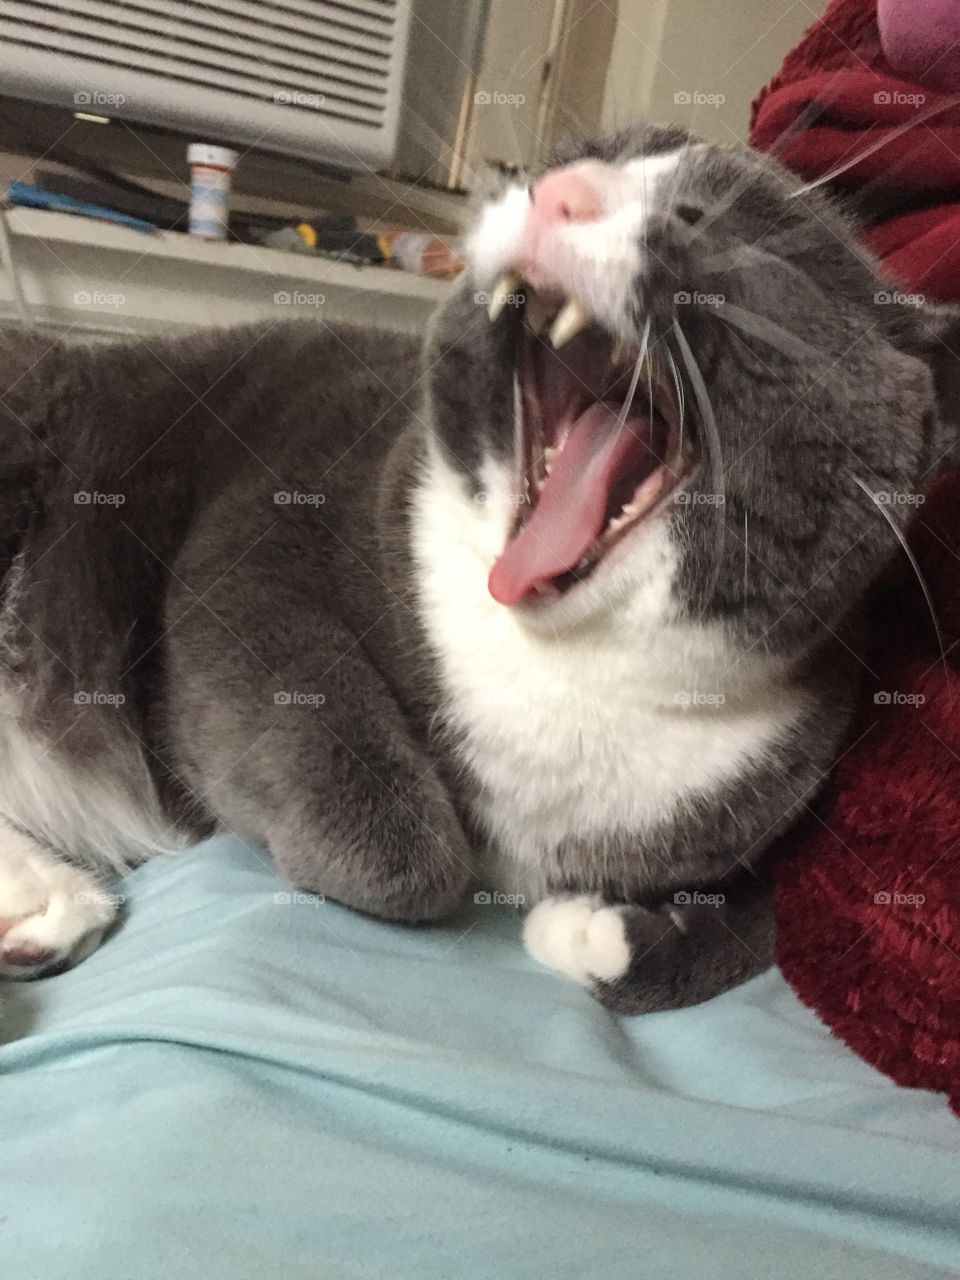 Sammy yawn attack